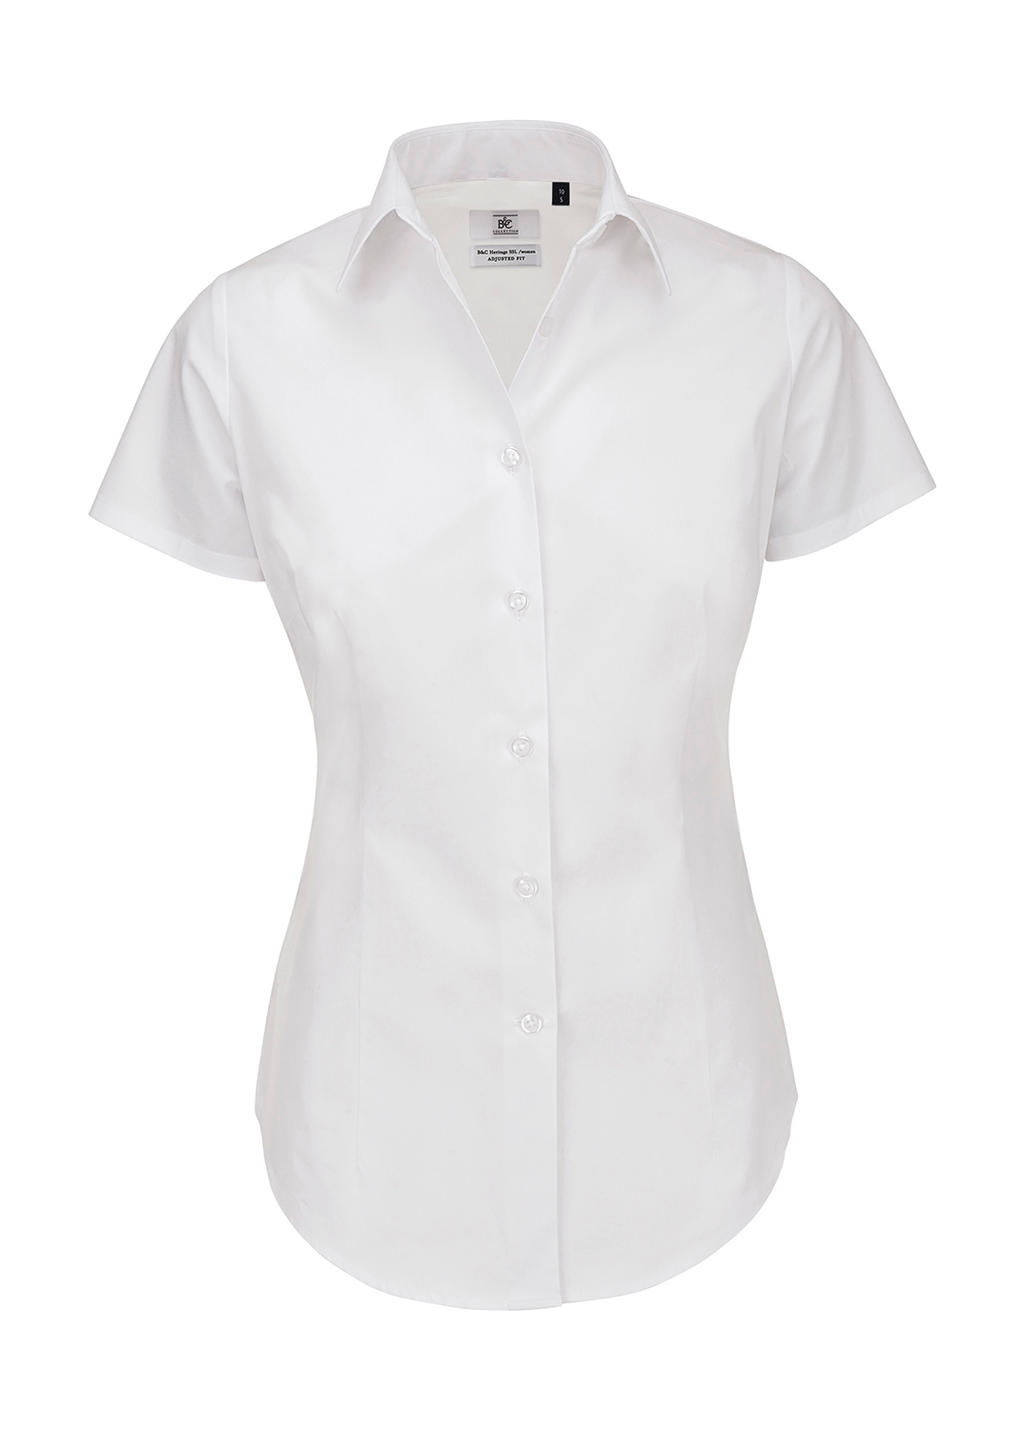 Ladies' Heritage Poplin Shirt - SWP44